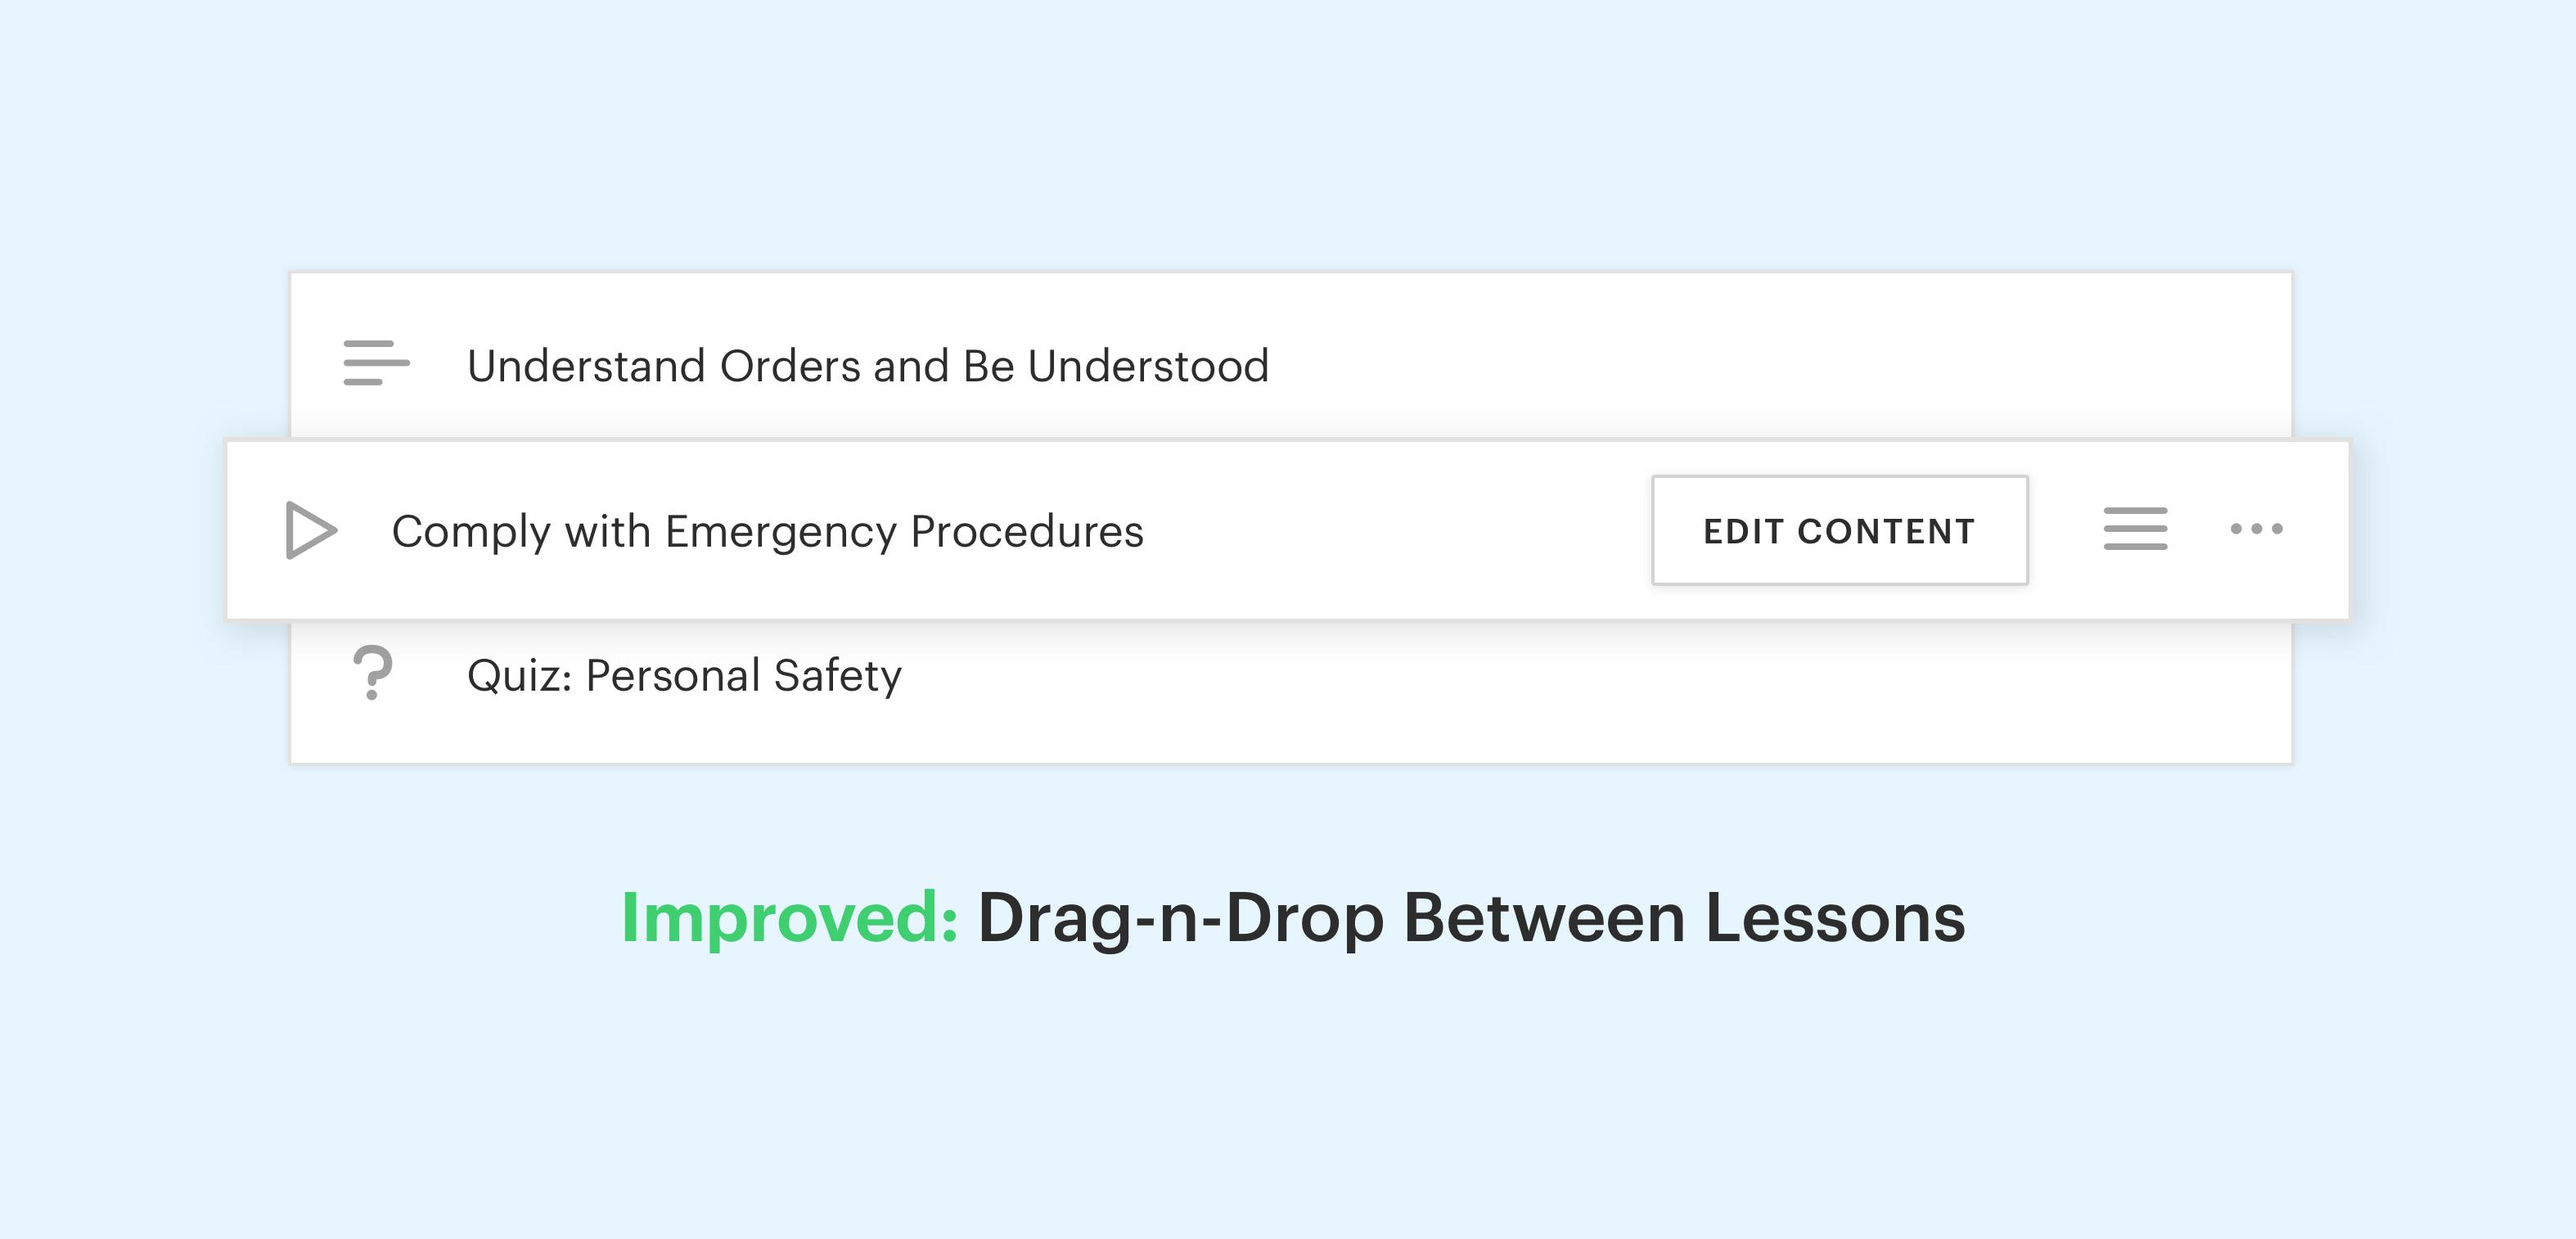 Improved: Drag-n-Drop Between Lessons